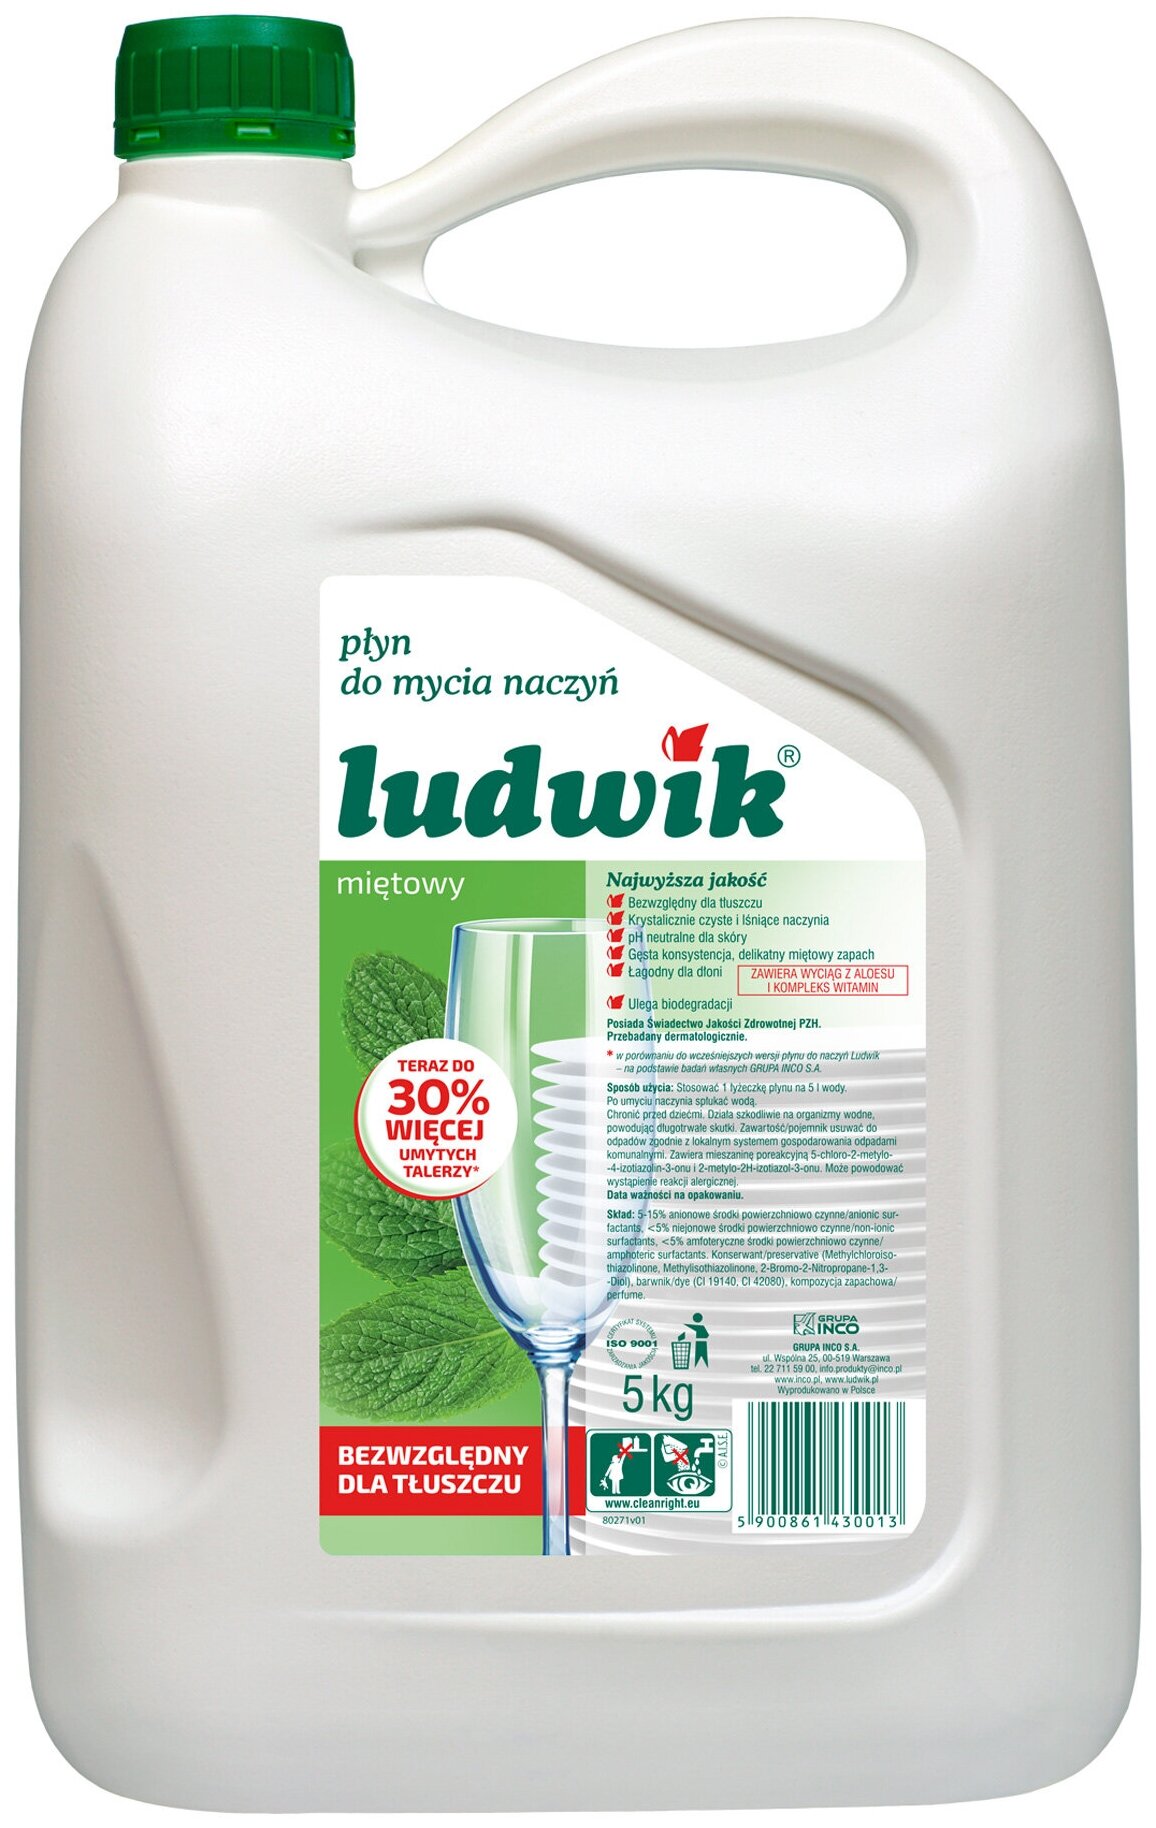 Средство для мытья посуды "Ludwik", мята, 5 кг